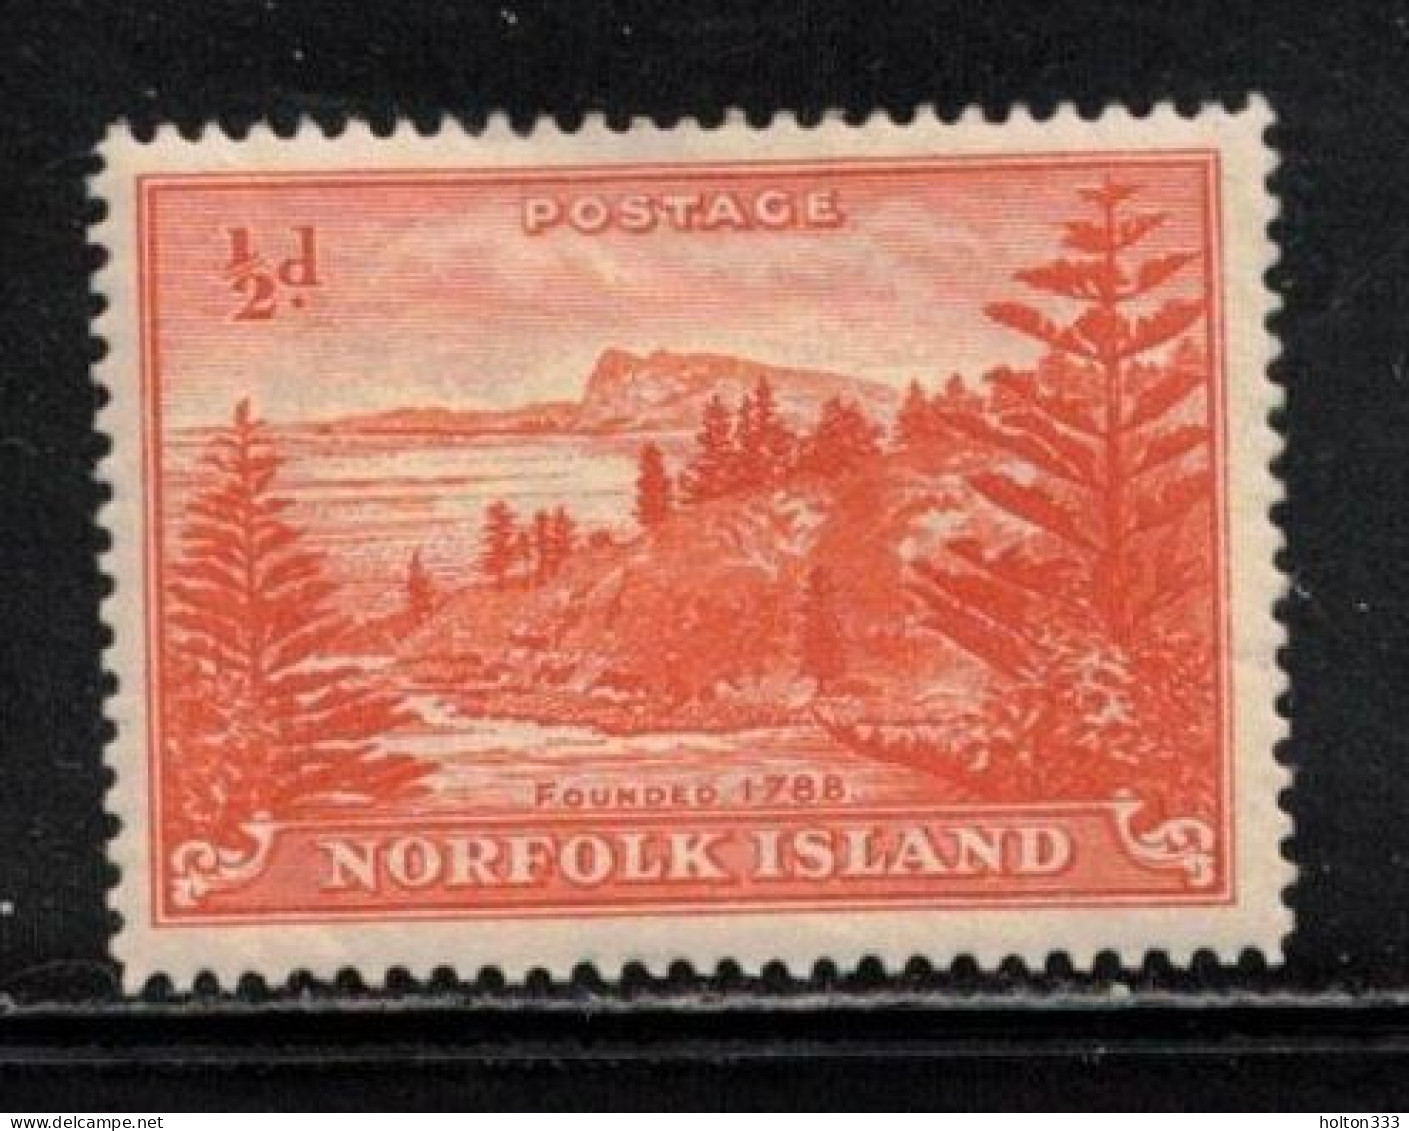 NORFOLK ISLAND Scott # 1 MH - Founded 1788 - Isla Norfolk